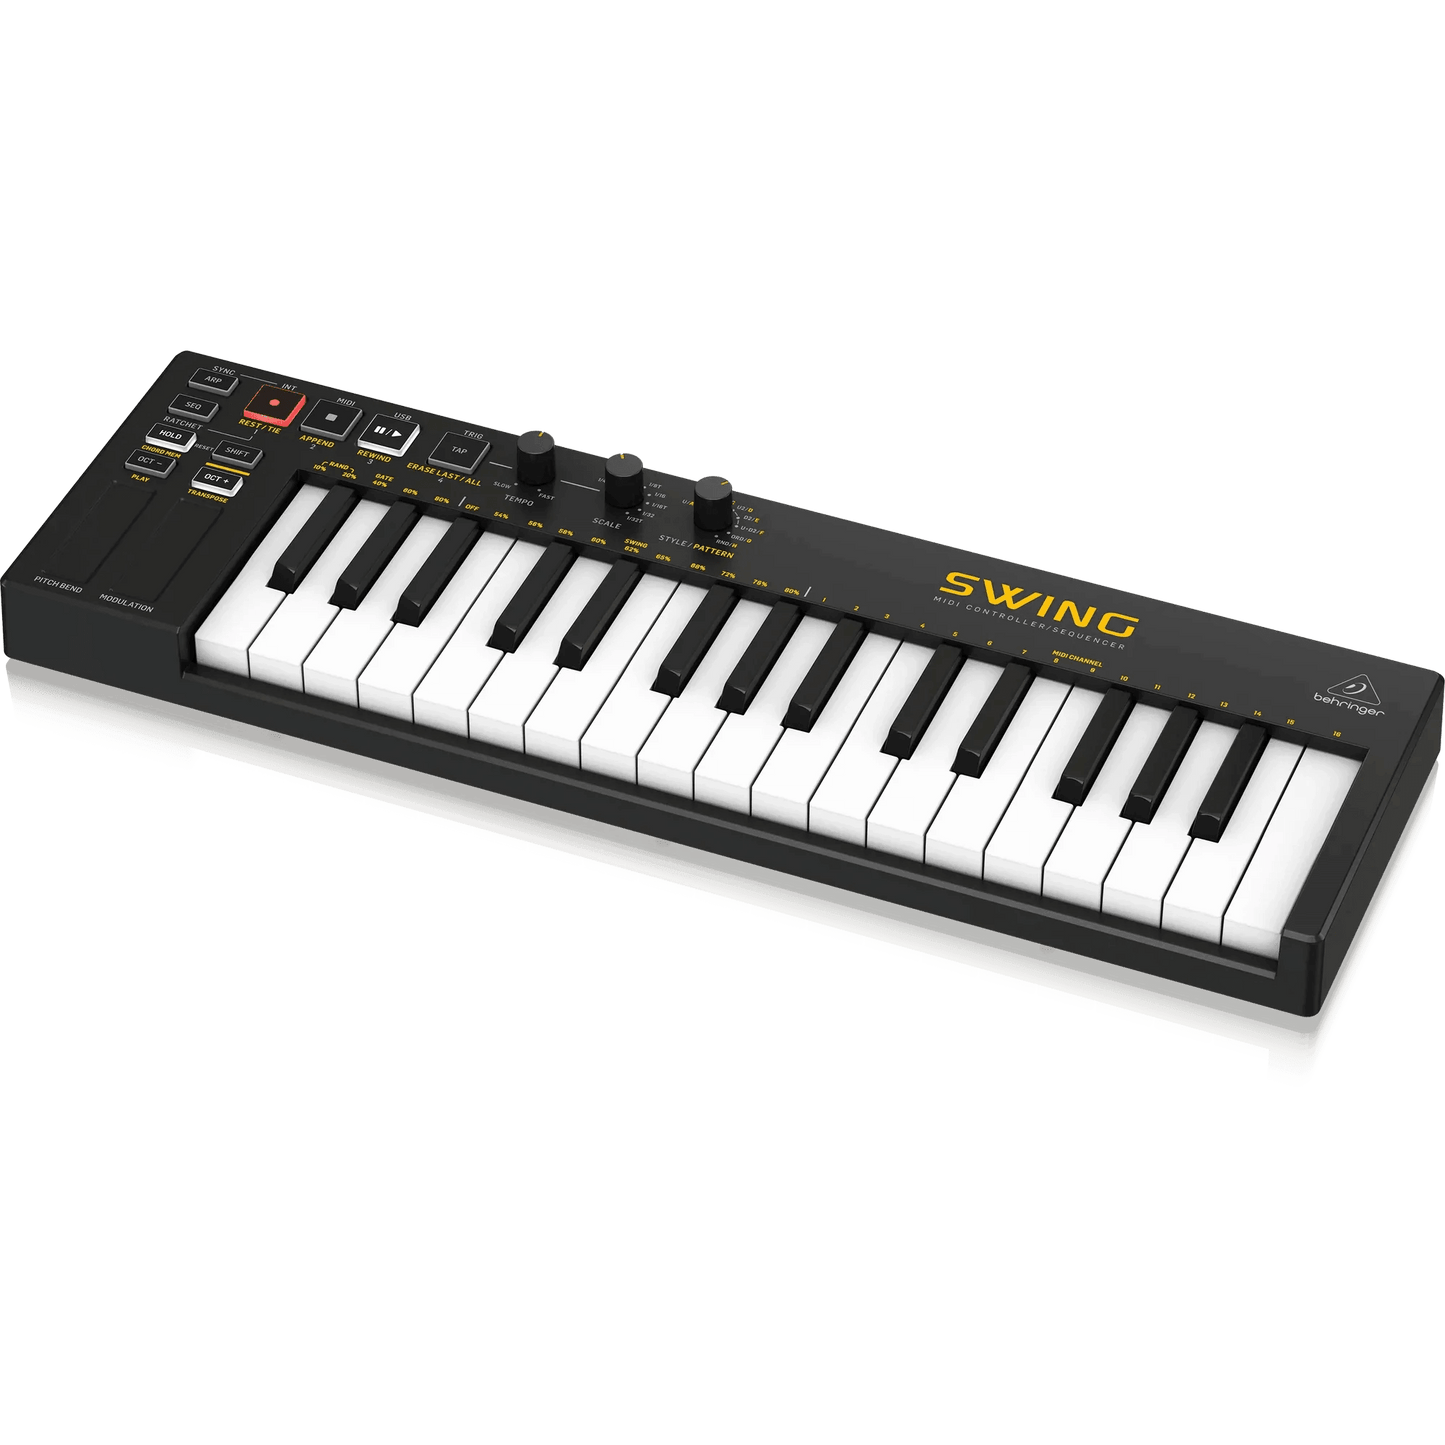 Behringer Swing USB MIDI Controller Keyboard